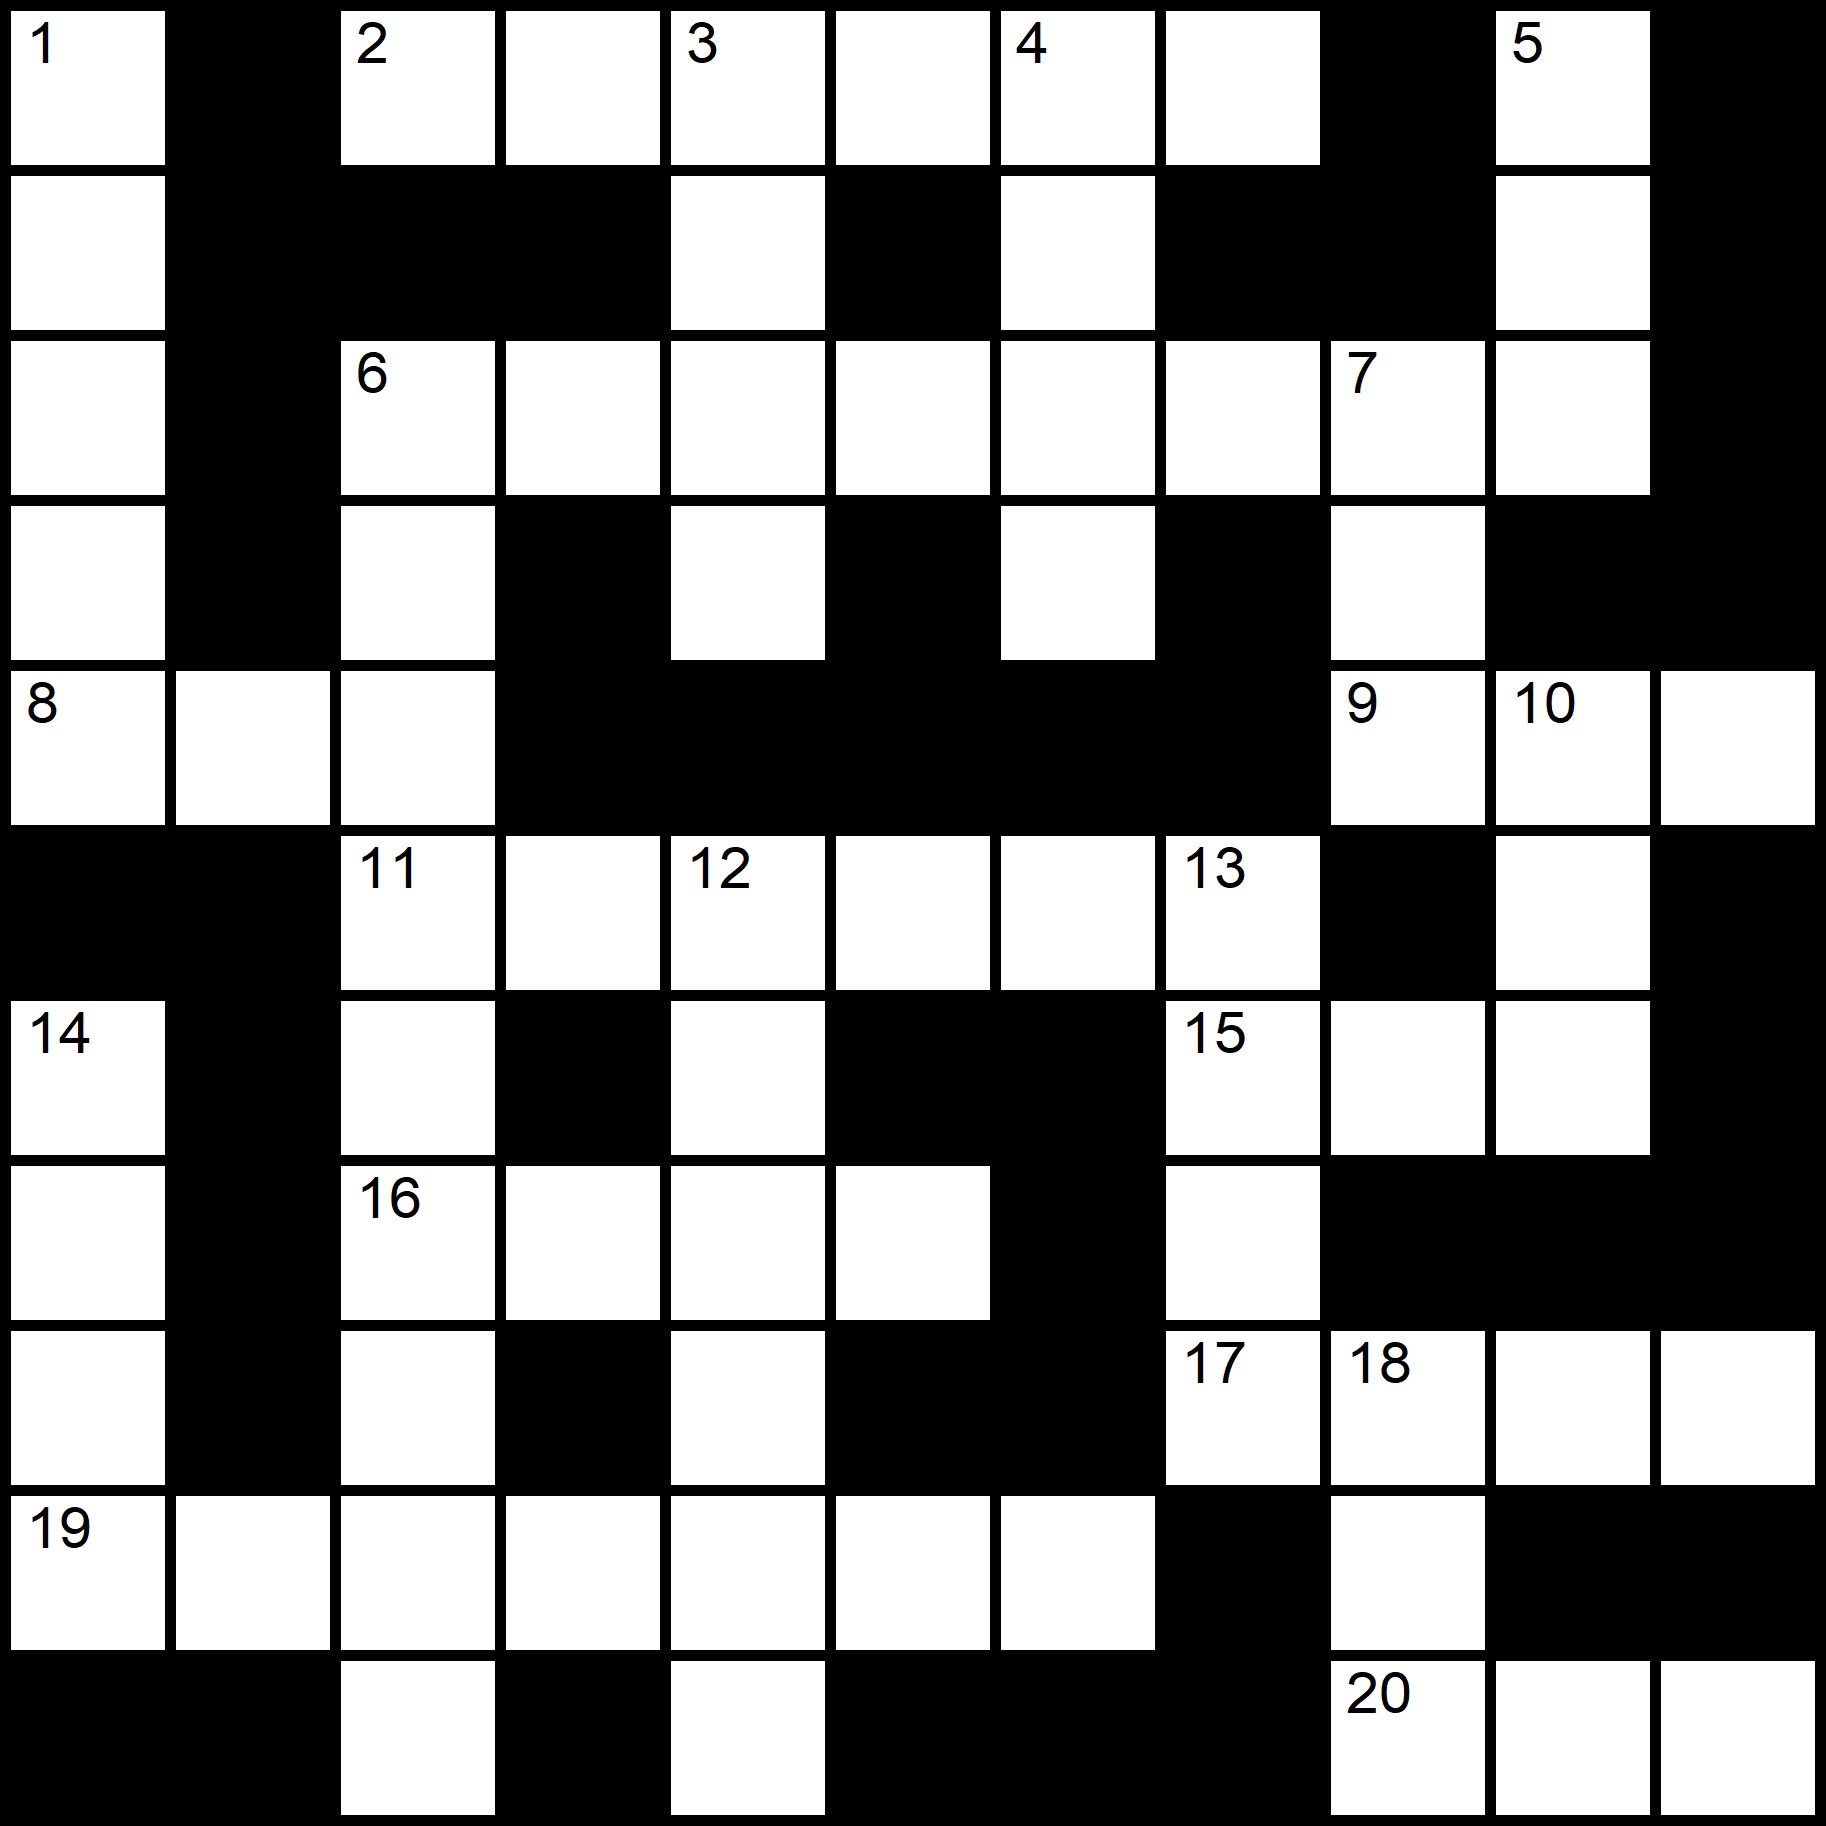 Simple Printable Crosswords -
Placidus Flora - Crossword number twenty-three